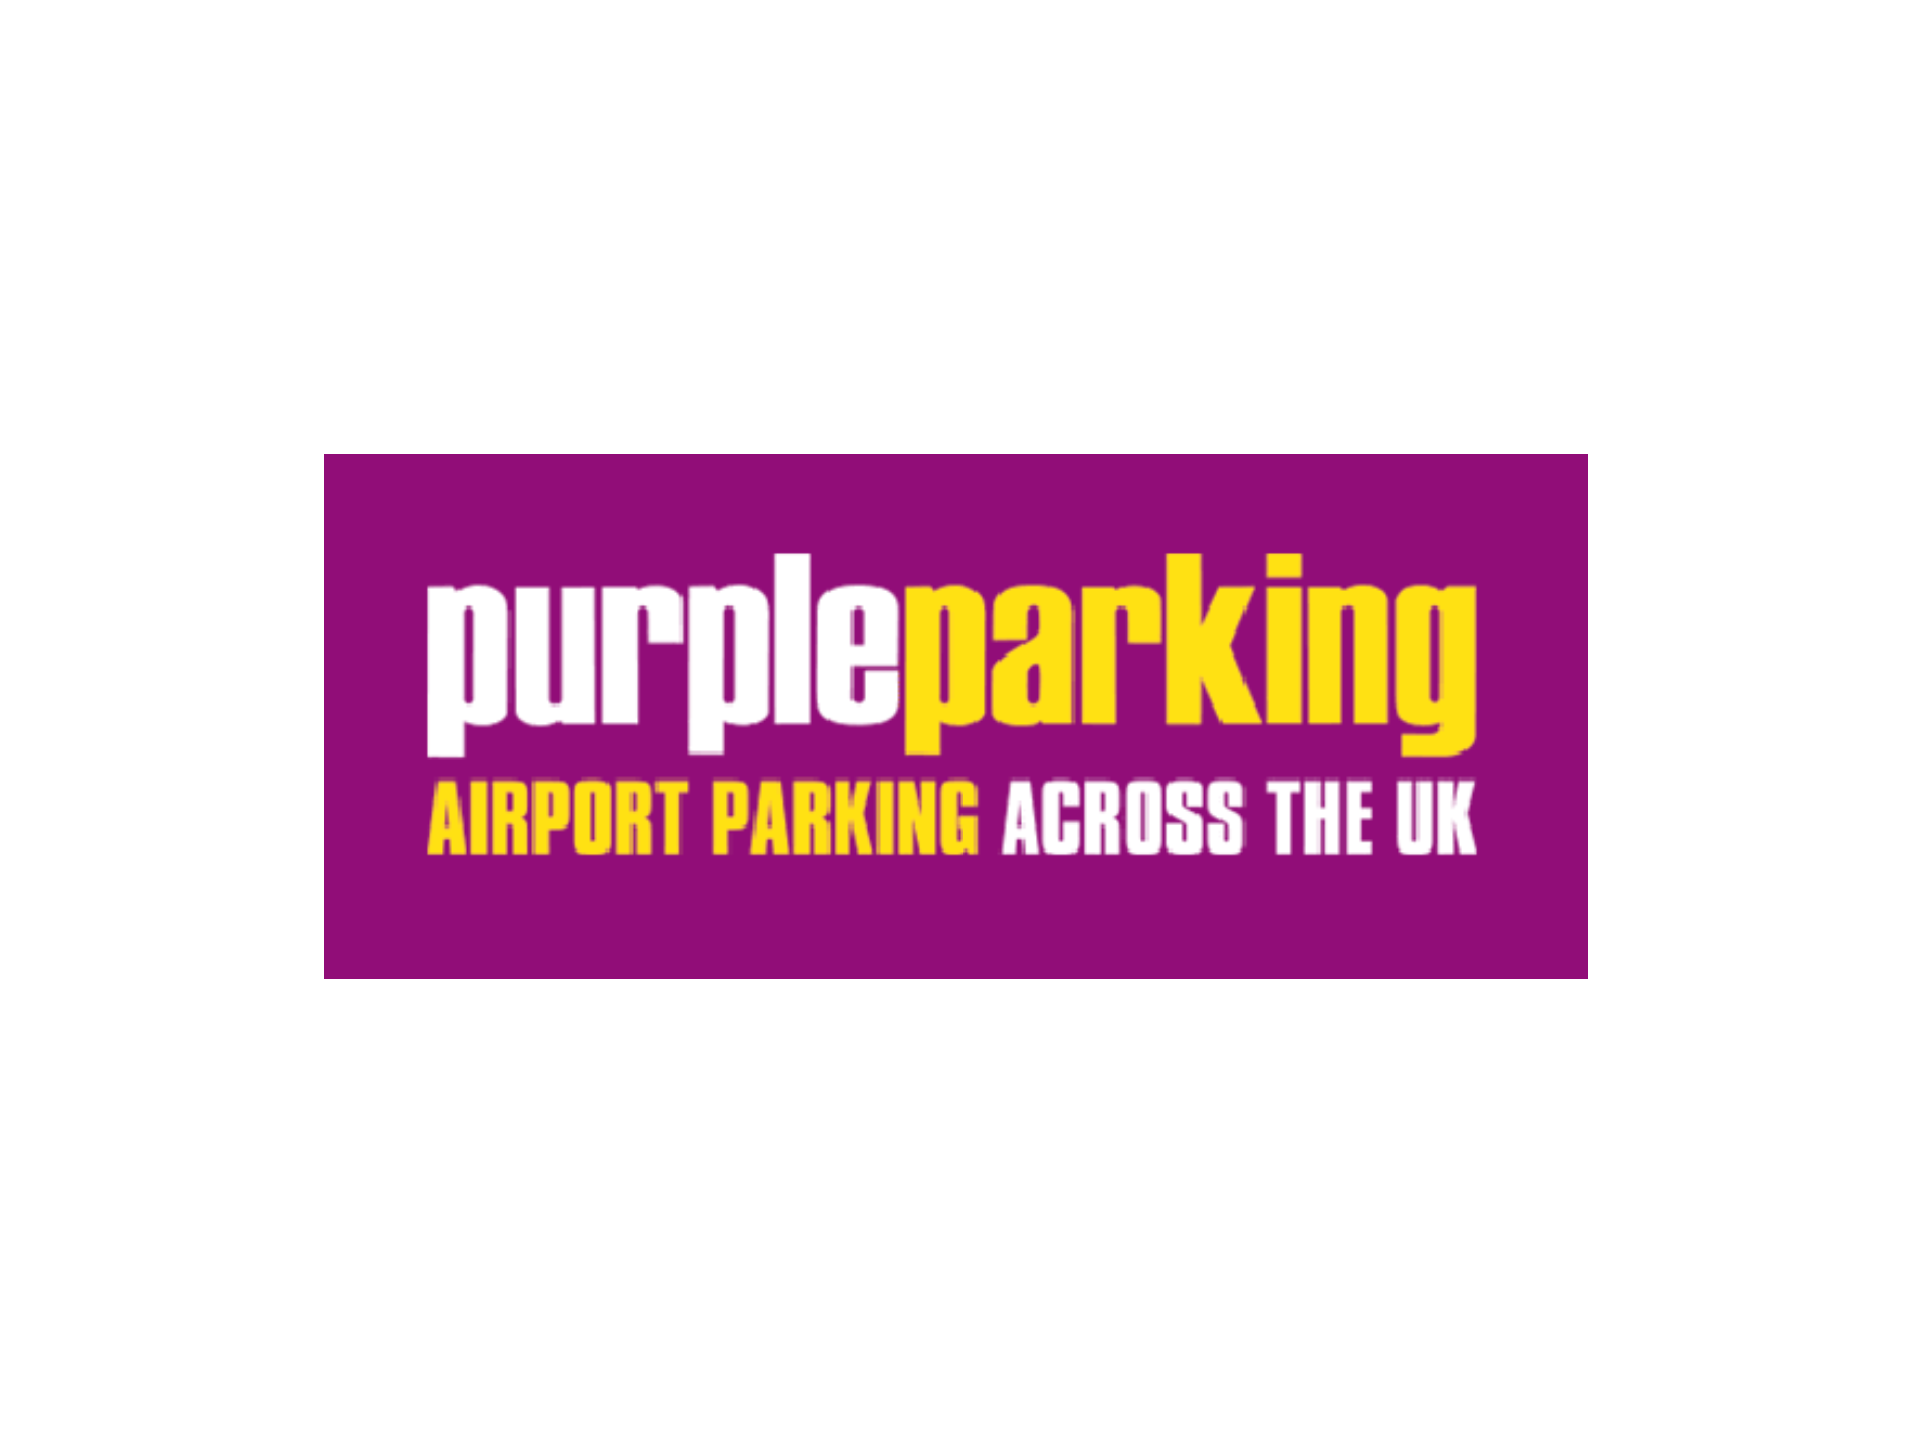 Purple Parking logo